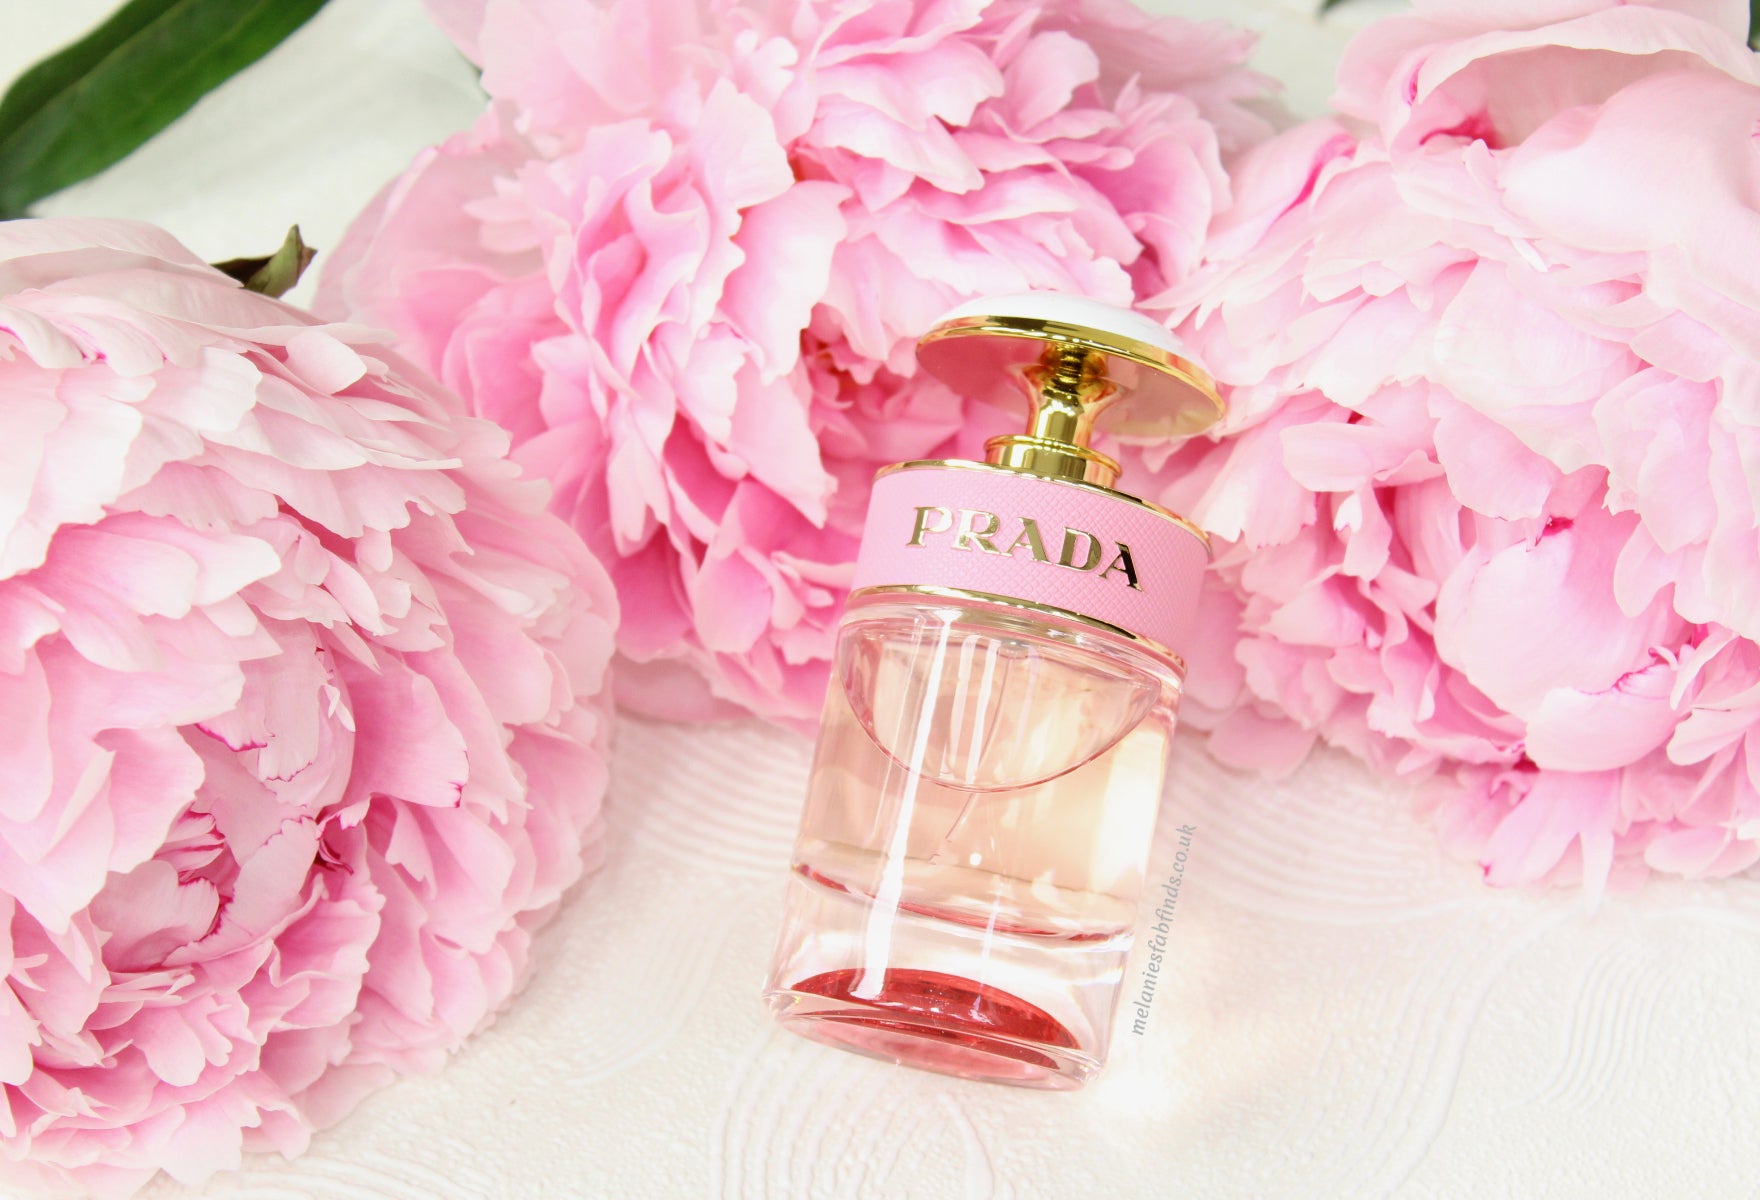 Prada Candy Florale EDT (L) | Ramfa Beauty